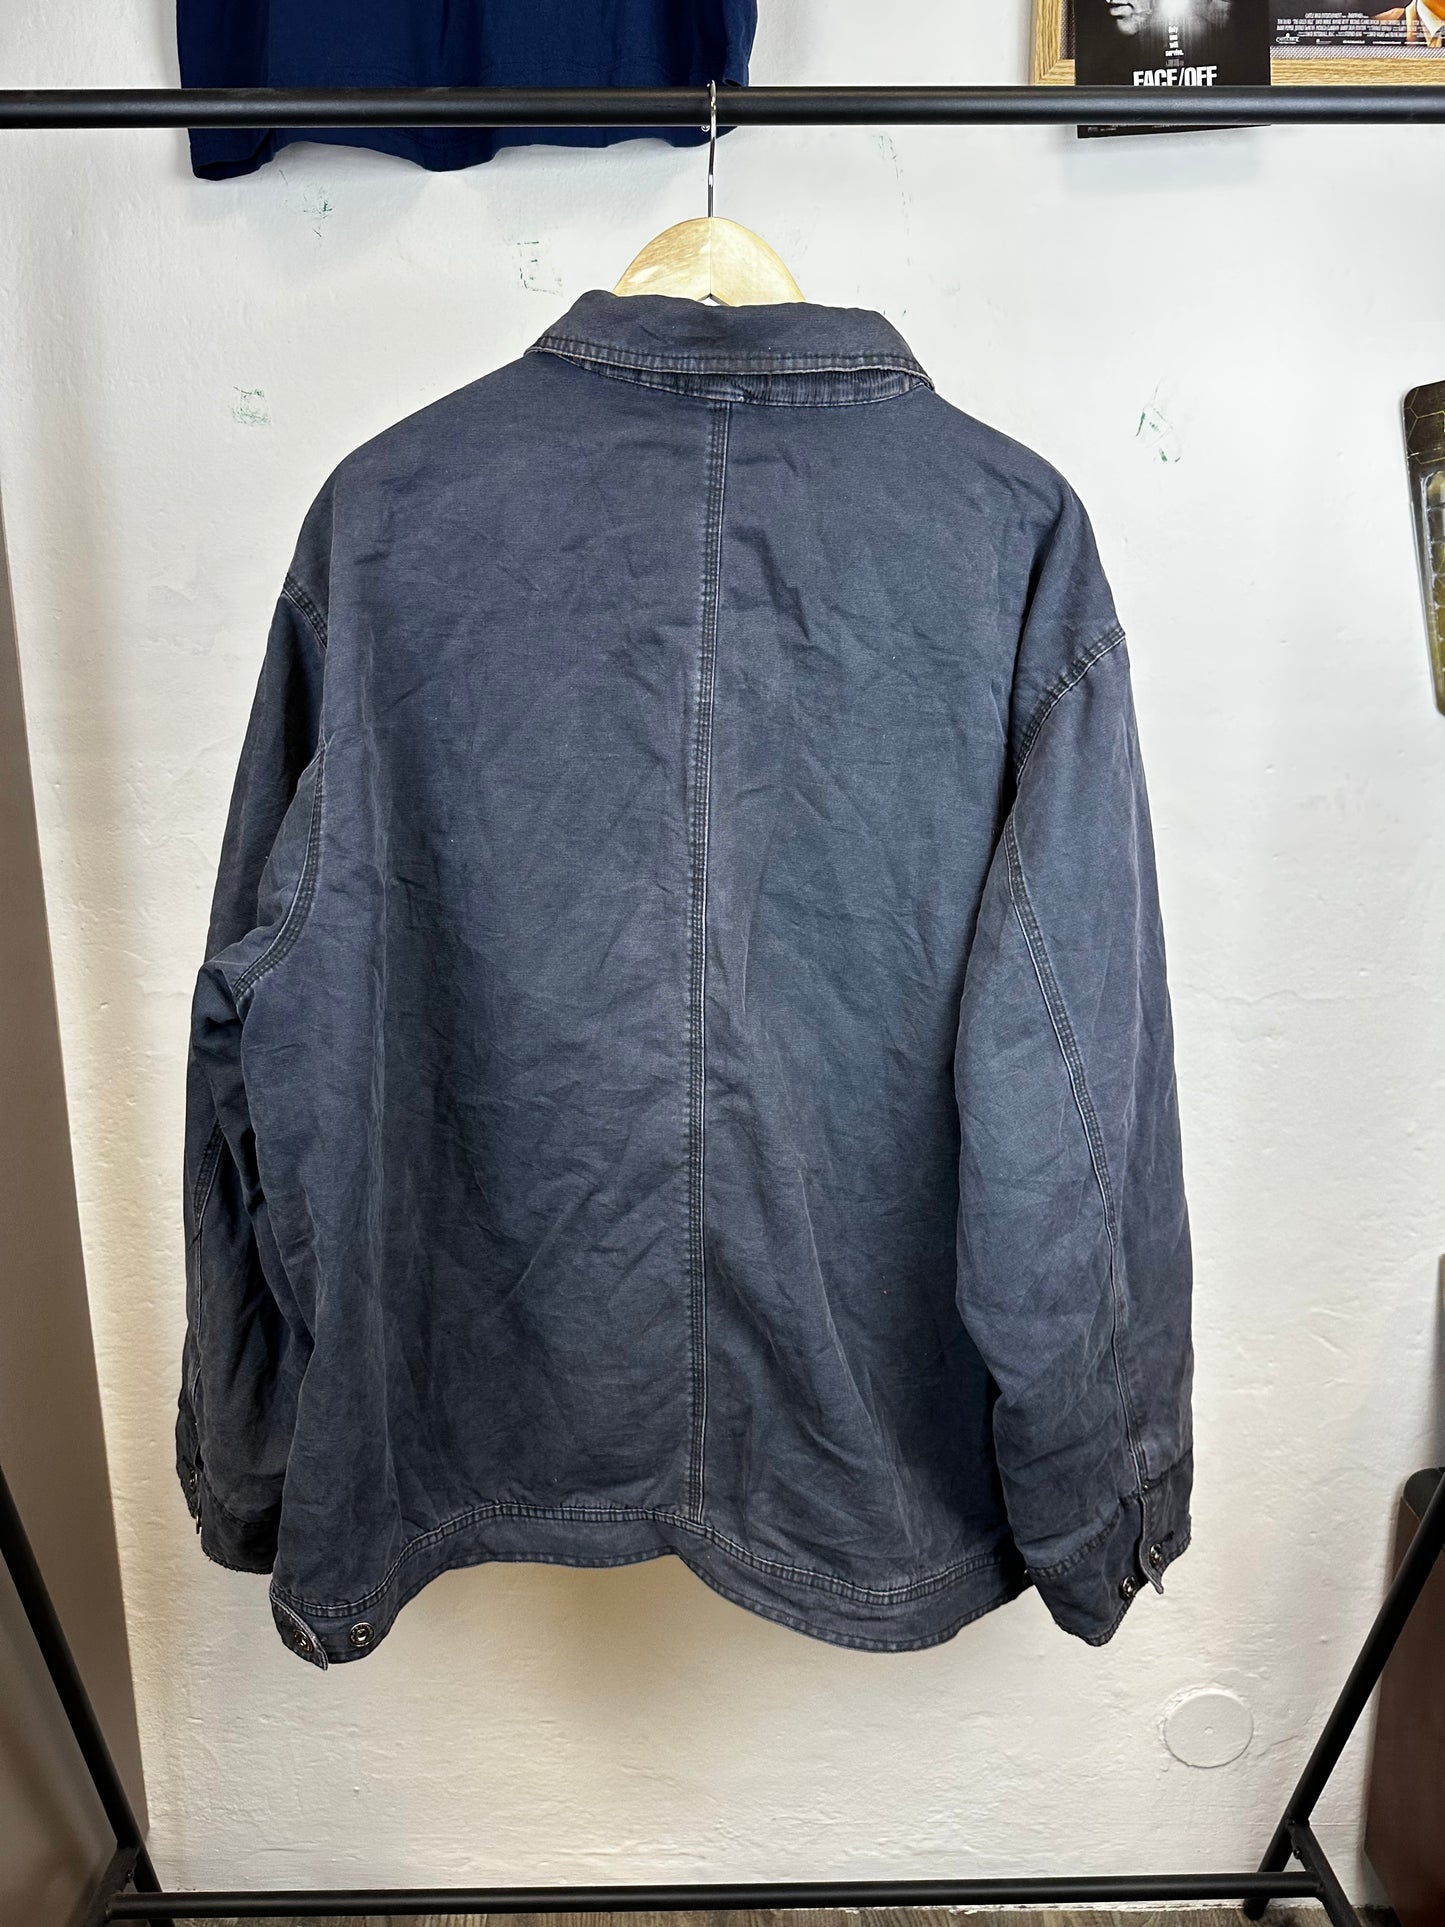 Vintage Old navy jacket - size XL